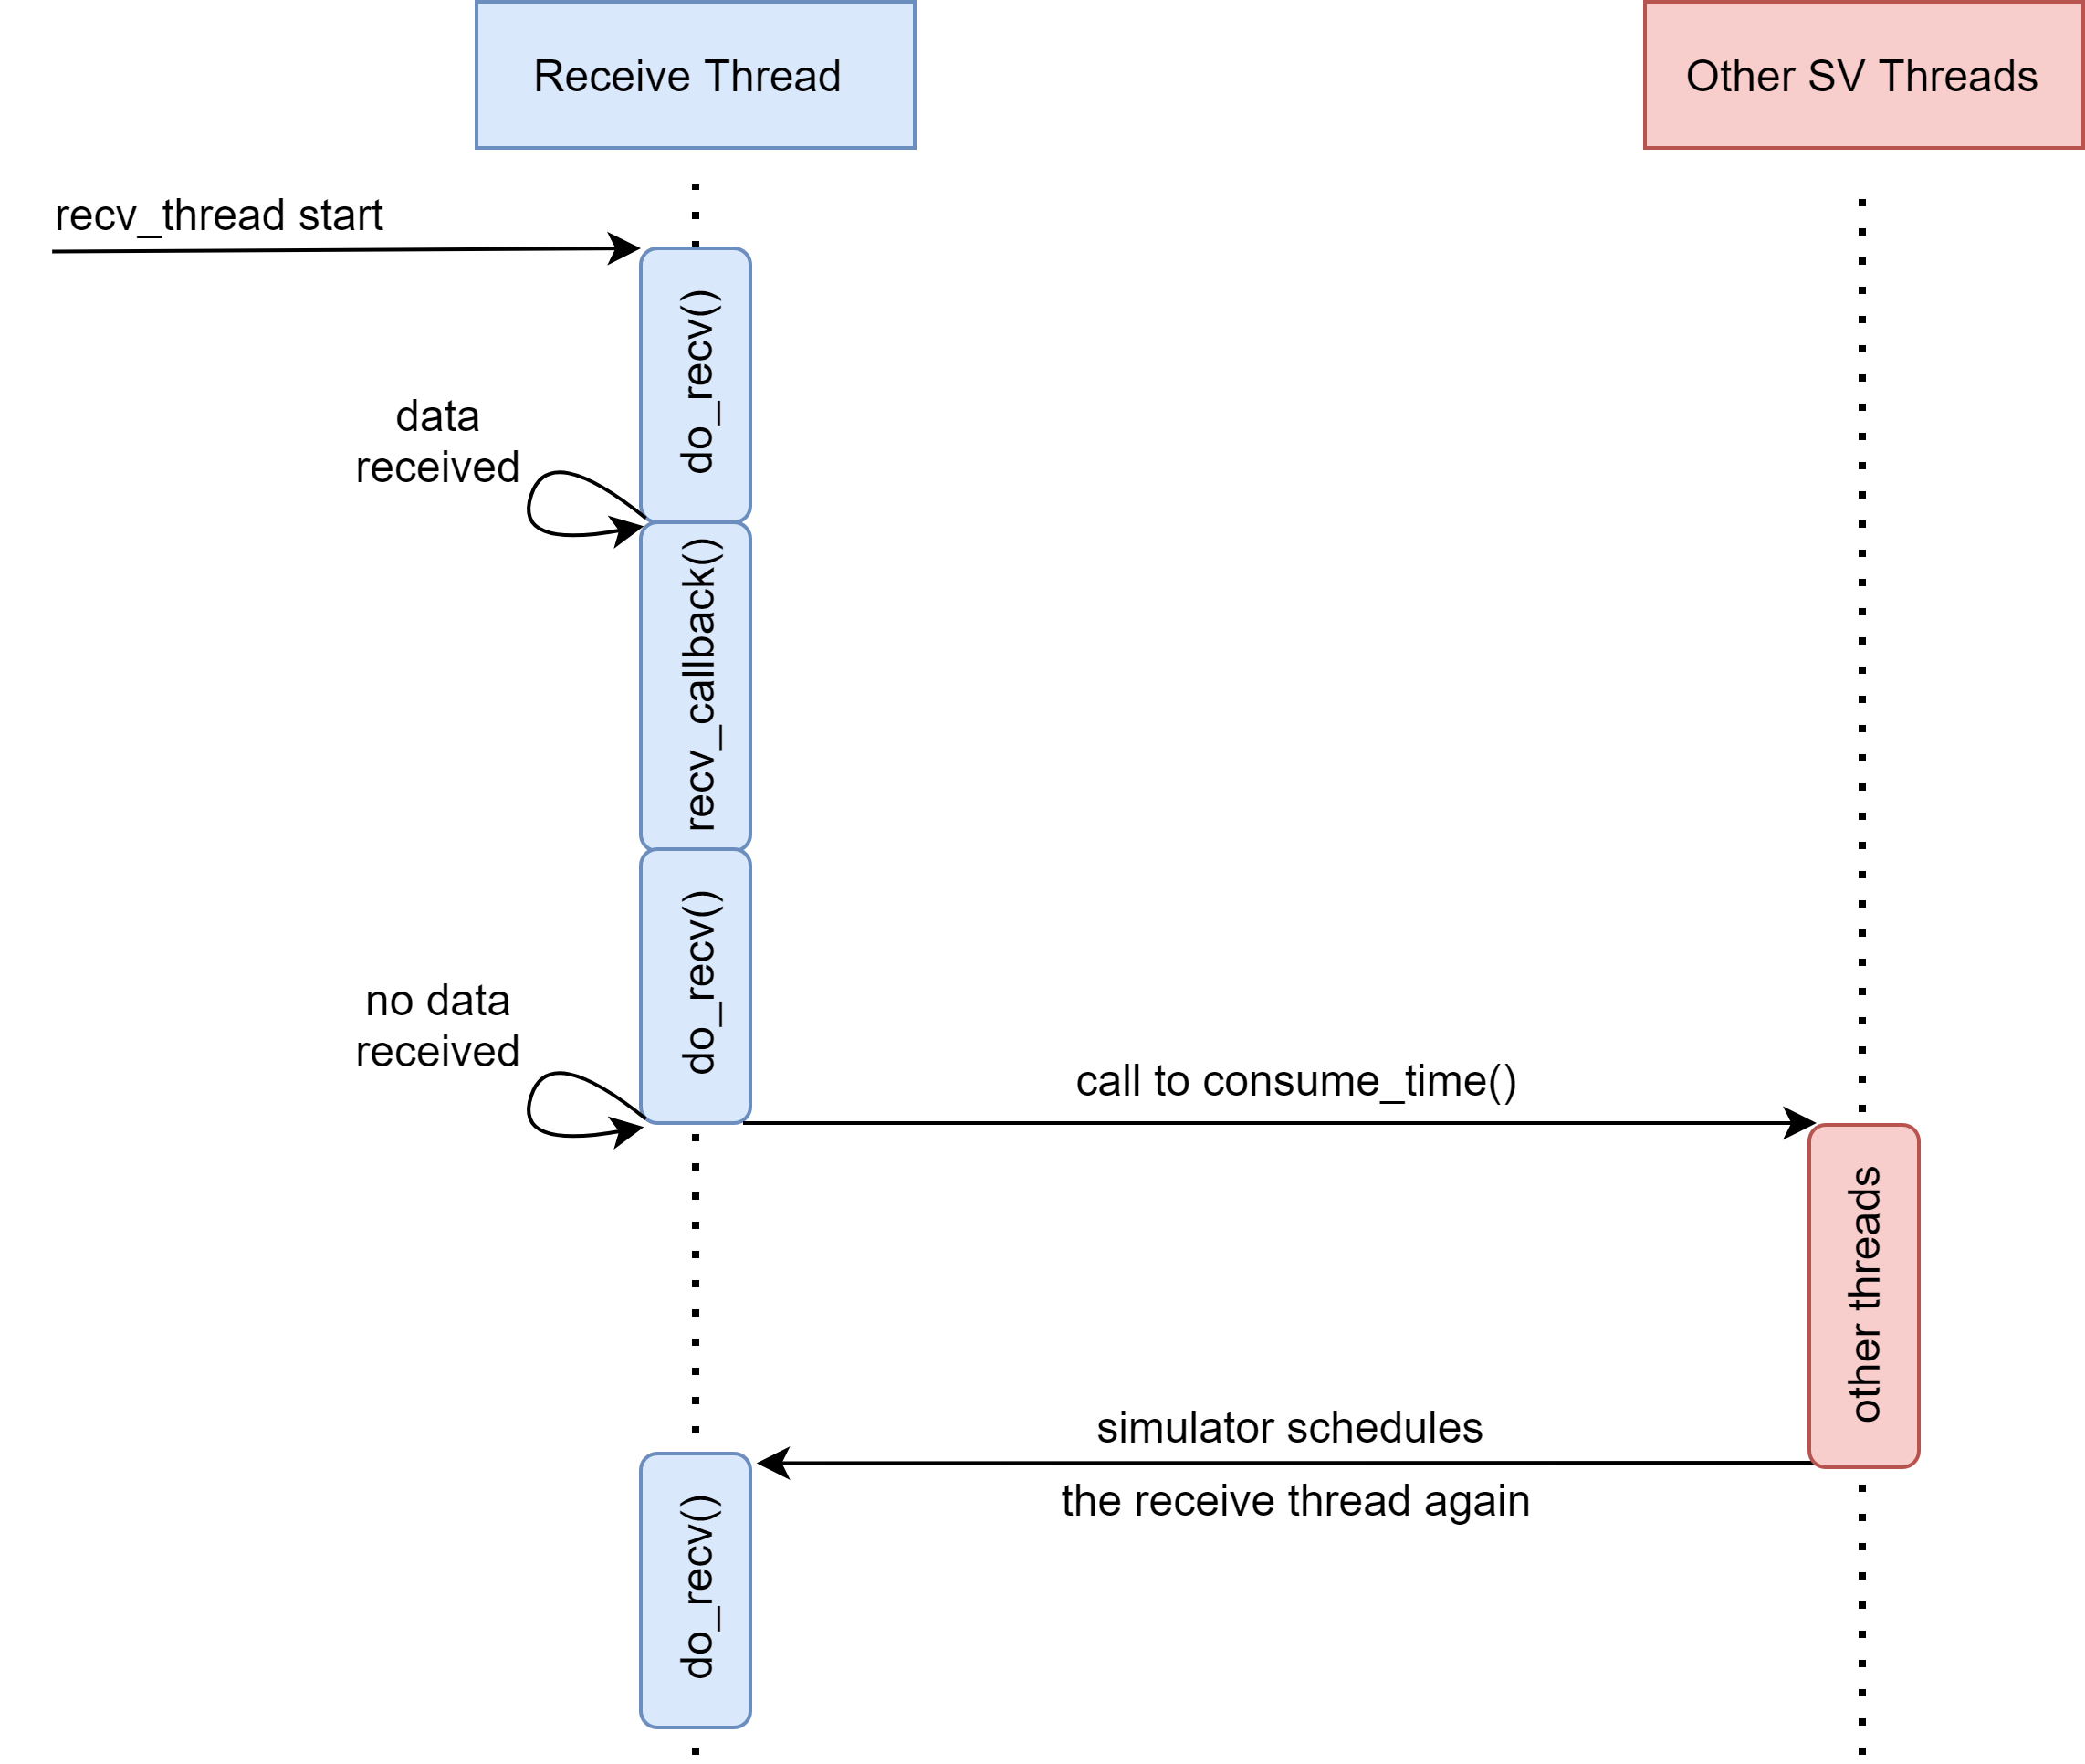 Figure 3. Execution flow of simulator threads